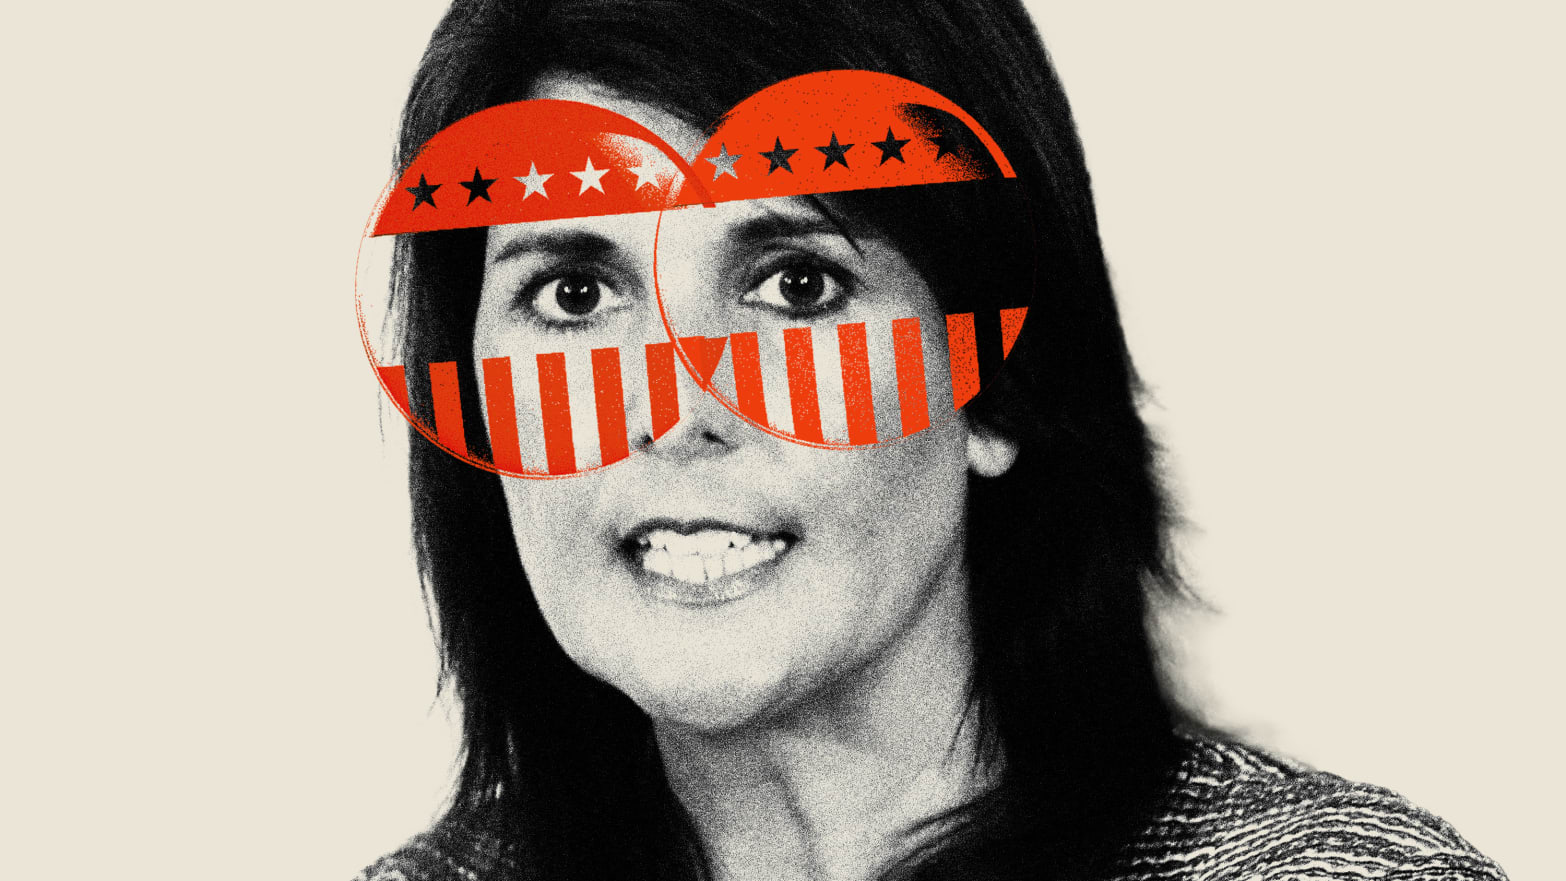 Photo illustration of Nikki Haley with voting badges overlaid over her eyes like a mask.